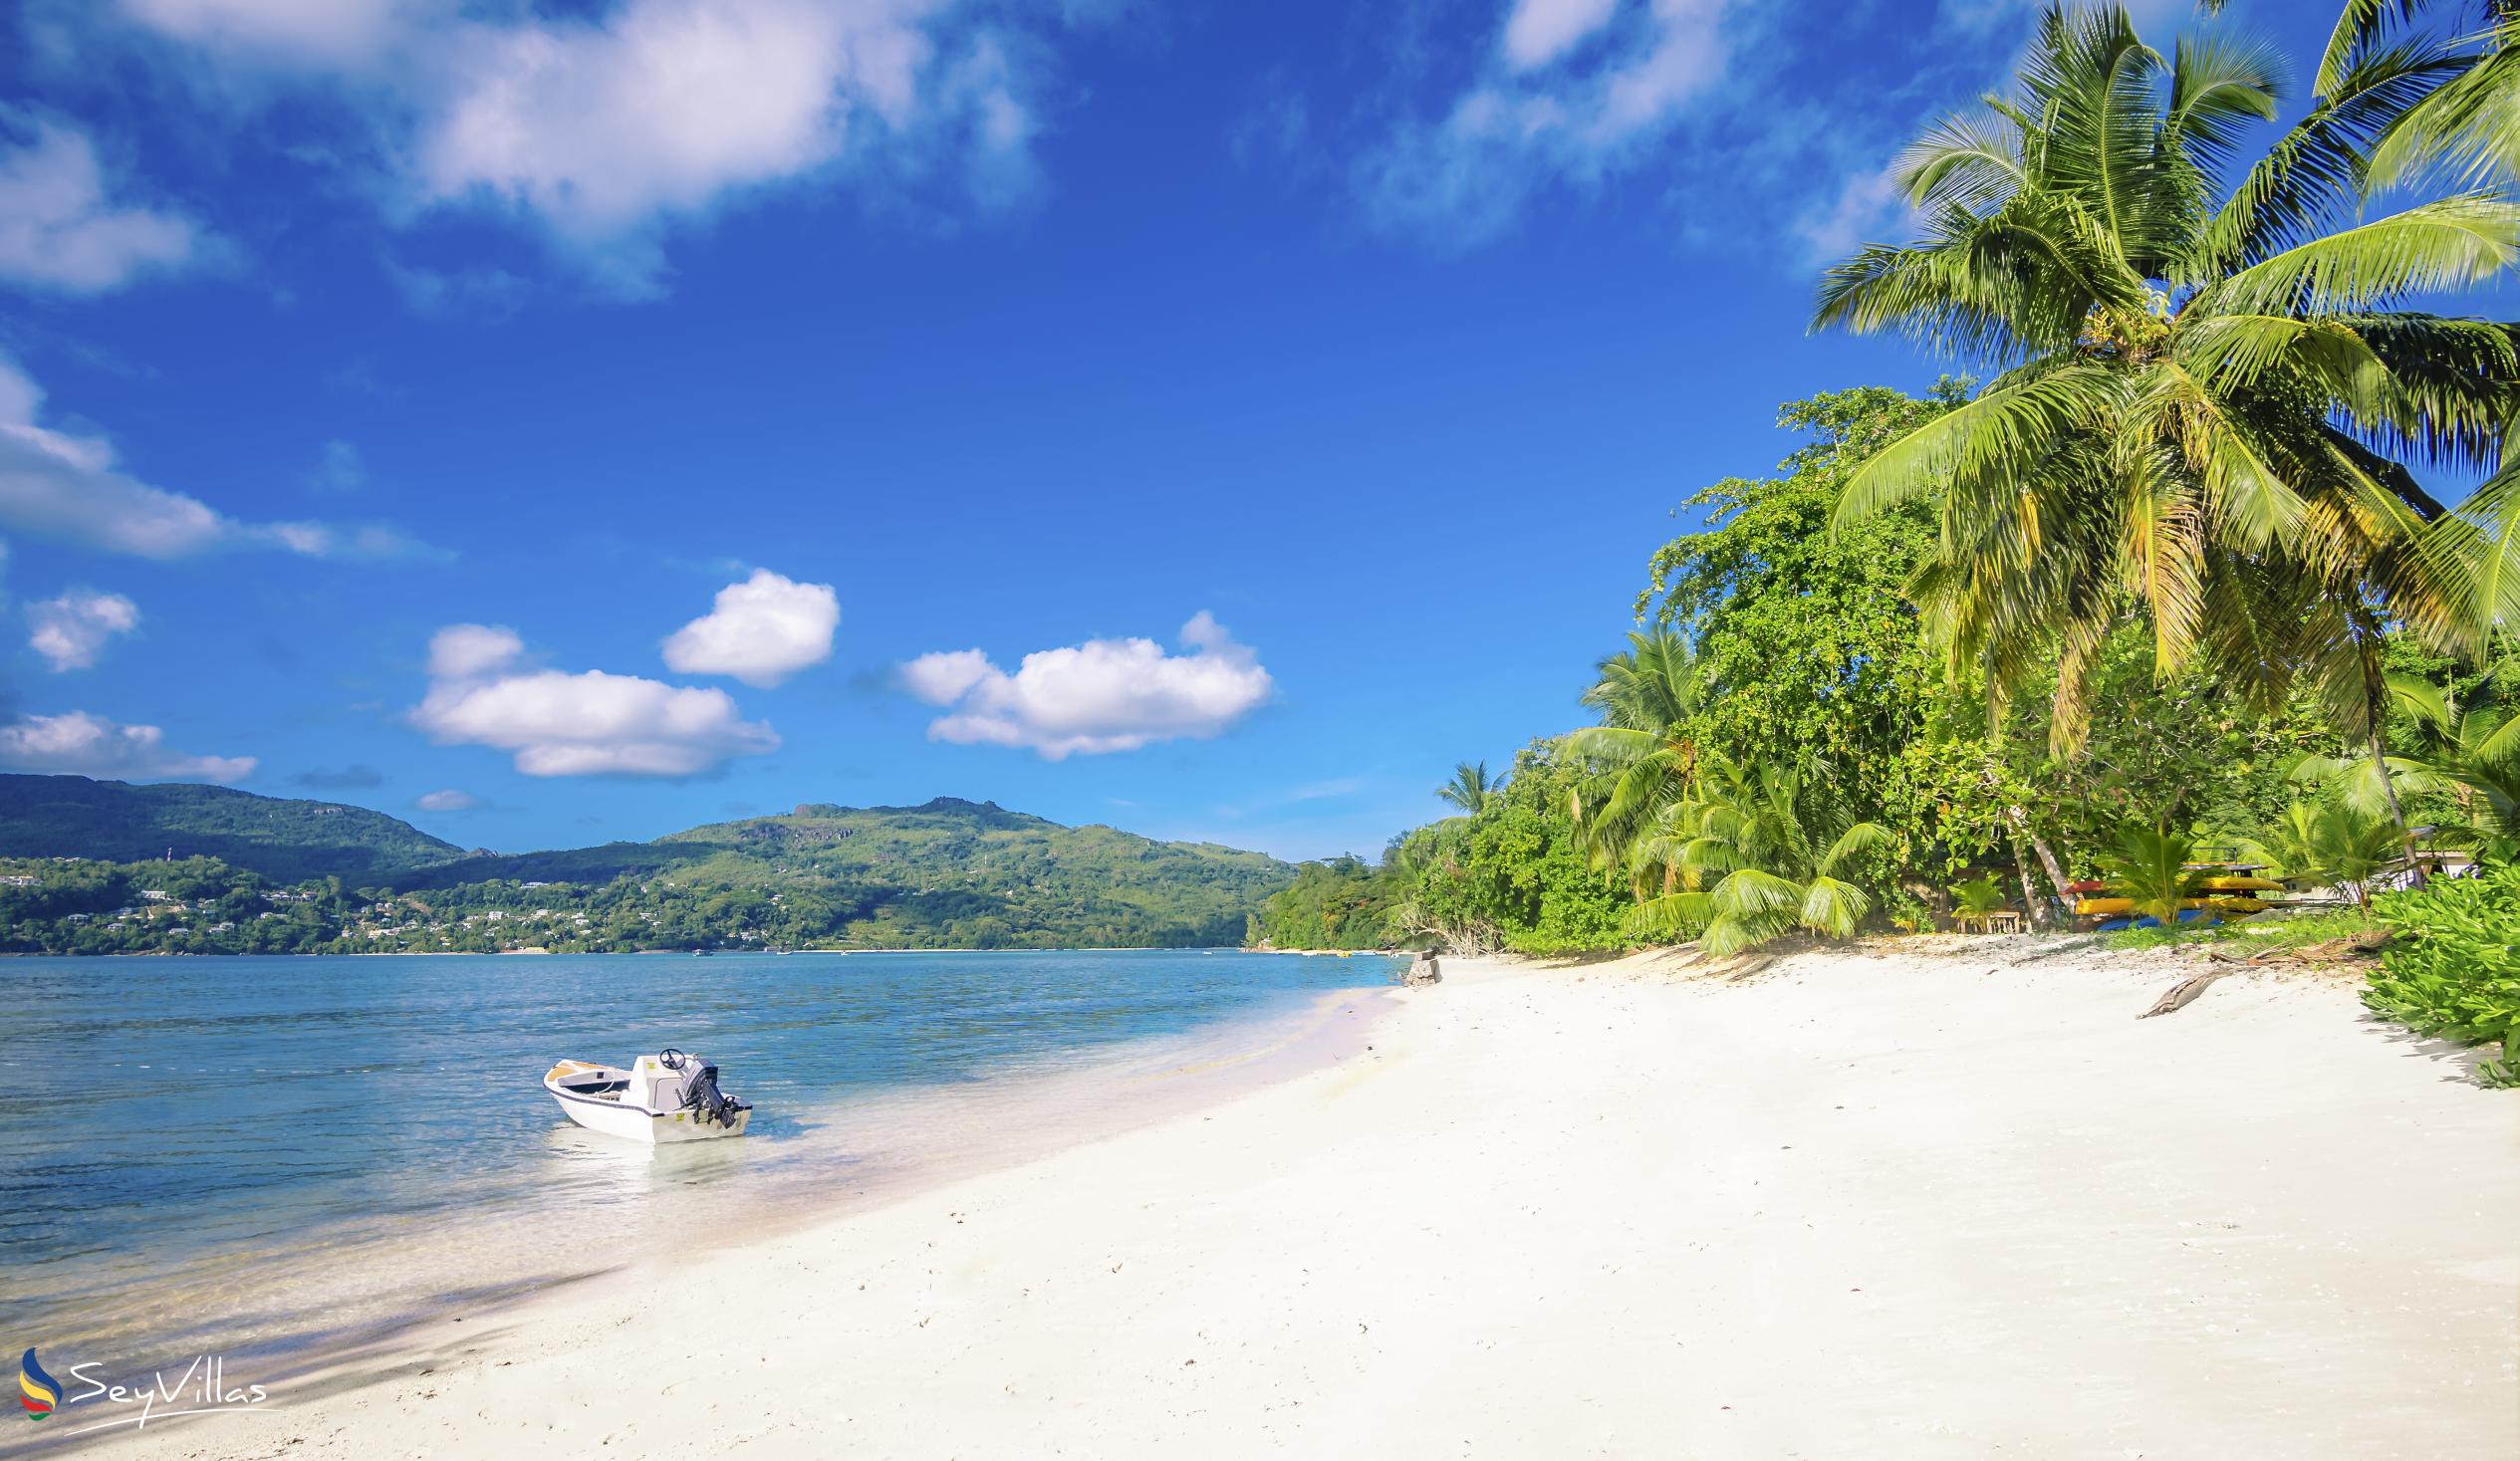 Foto 17: Pineapple Beach Villas - Posizione - Mahé (Seychelles)